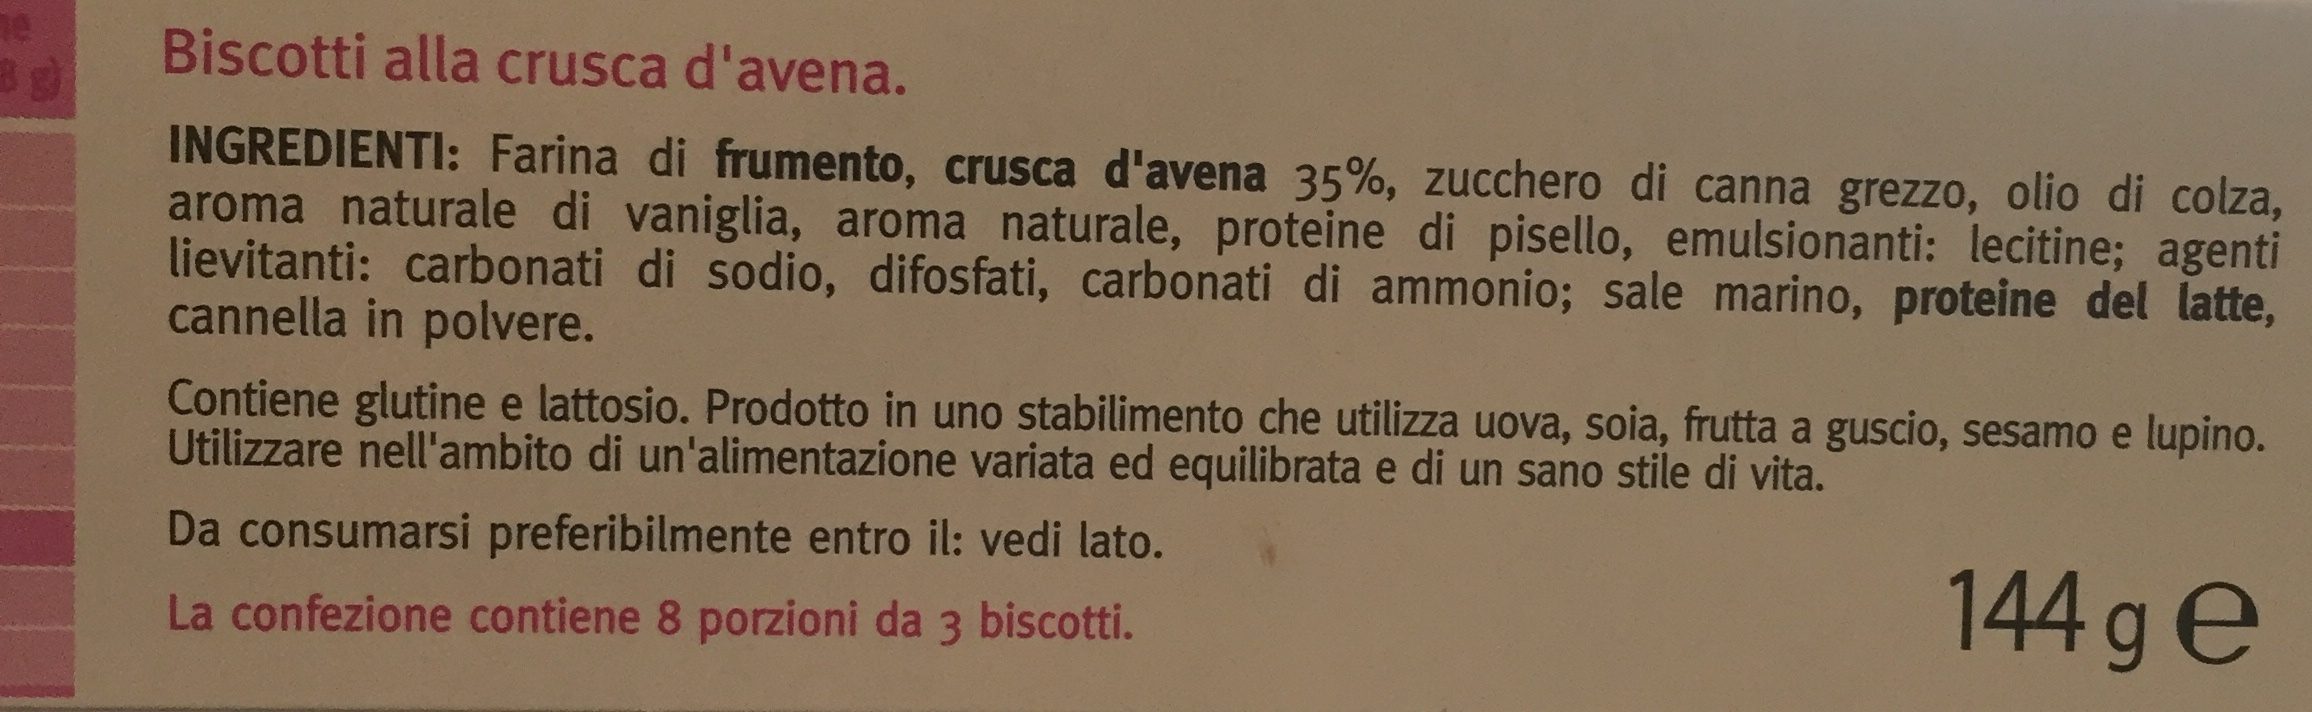 Bisc. crusca D'avena GR144 Cere - Ingredients - it